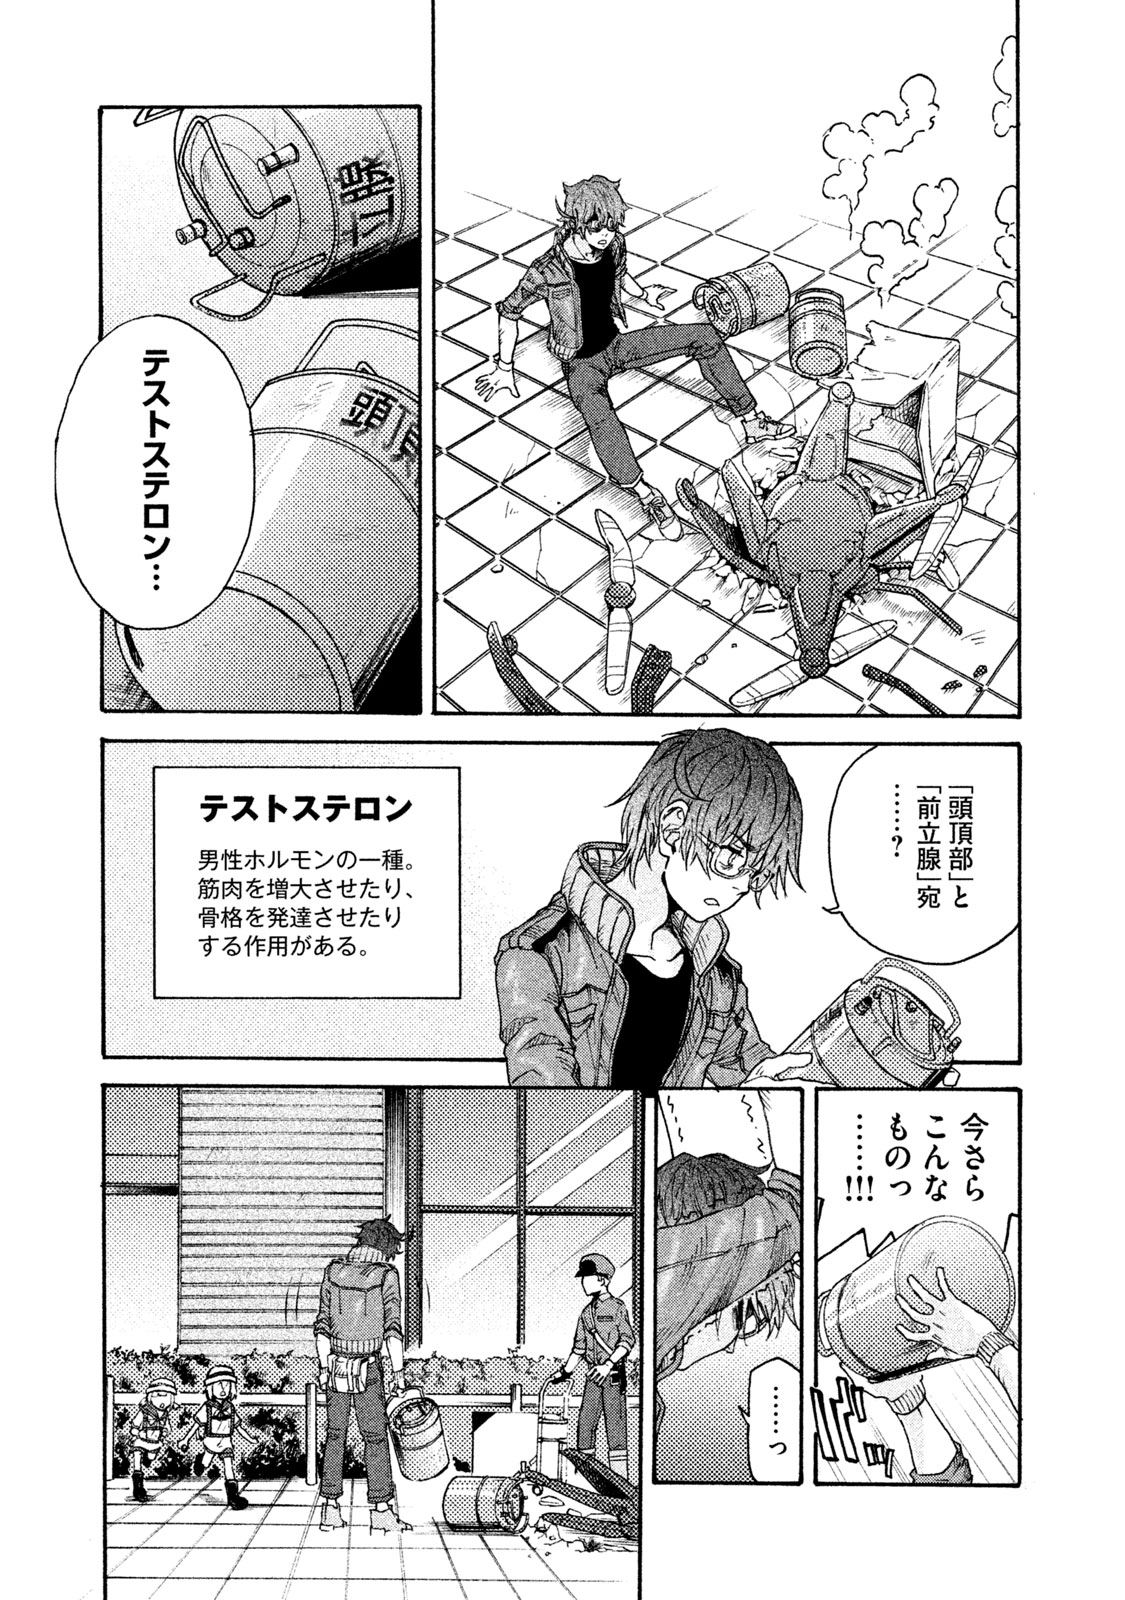 Hataraku Saibou BLACK - Chapter 20 - Page 5